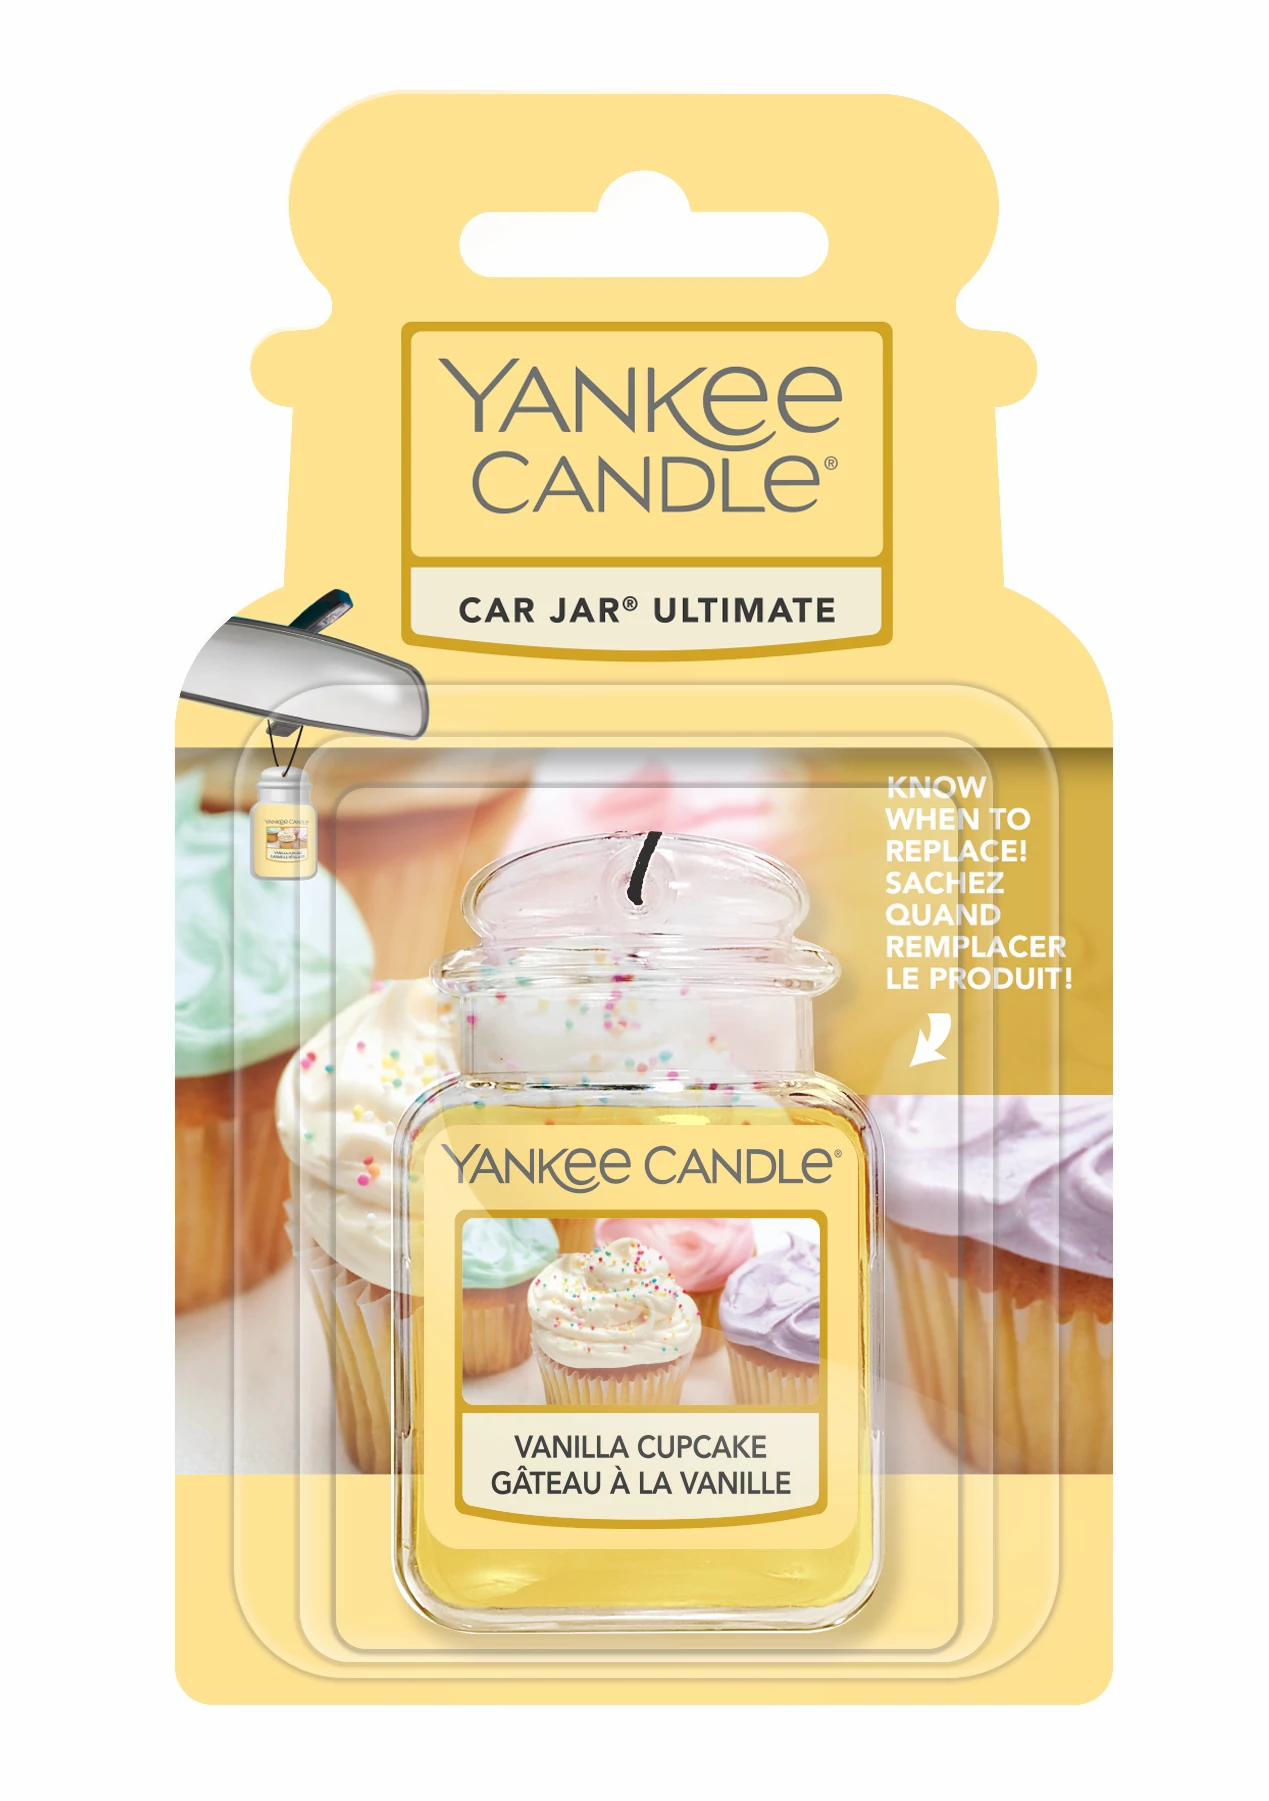 Yankee Candle - Car Jar Ultimate Vanilla Cupcake